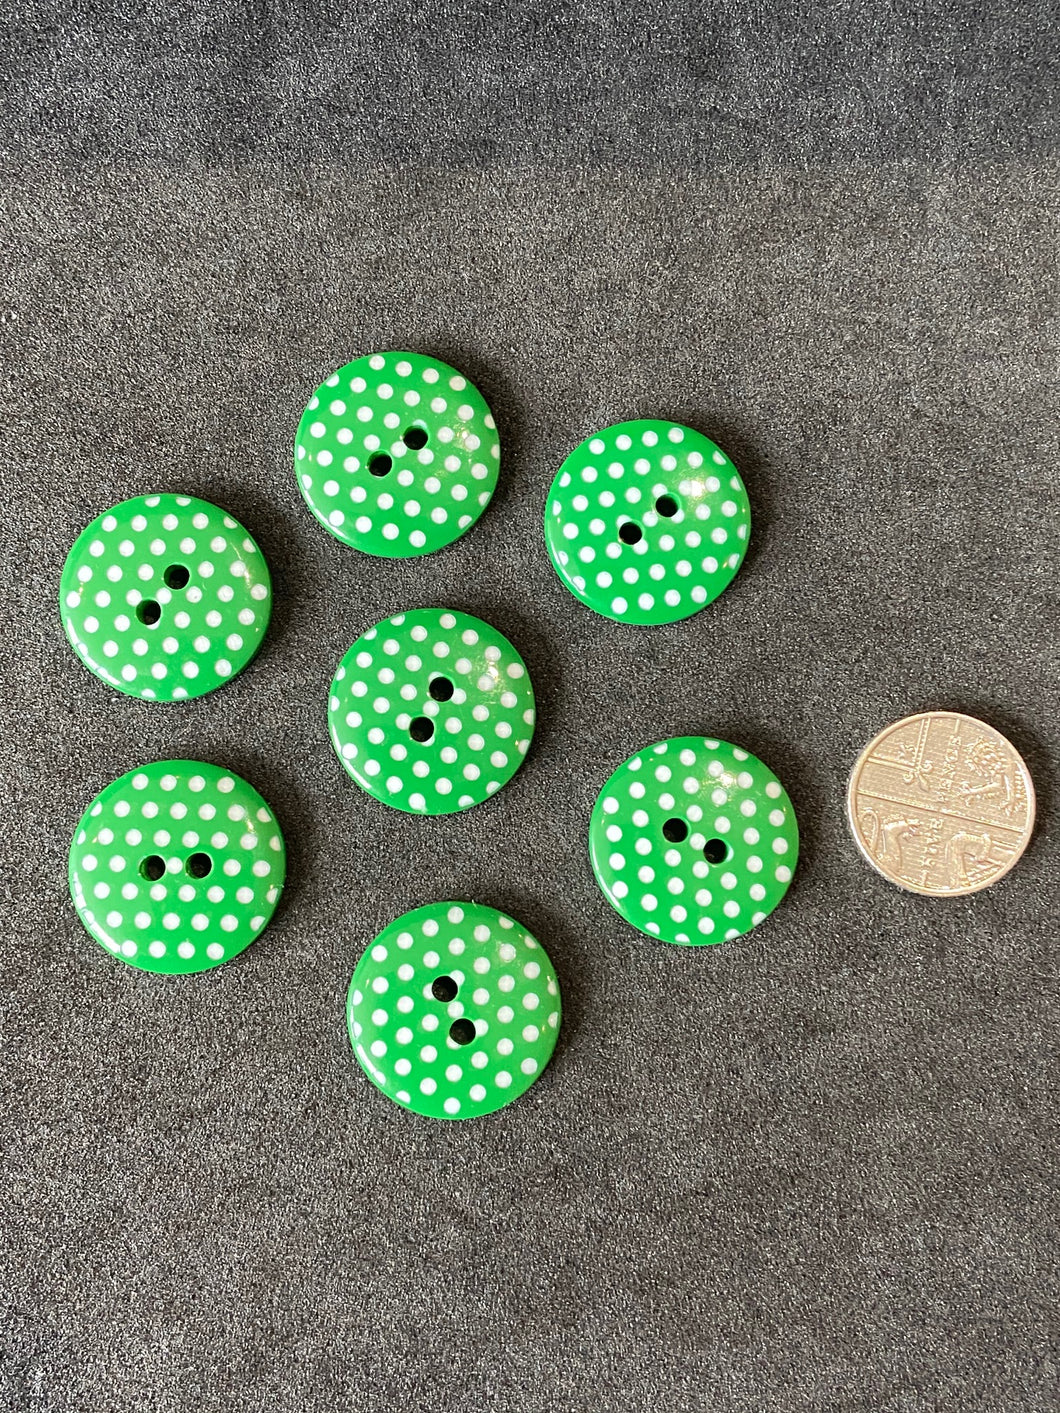 fabric shack haberdashery sewing dressmaking buttons 2 hole green polka dot 20mm